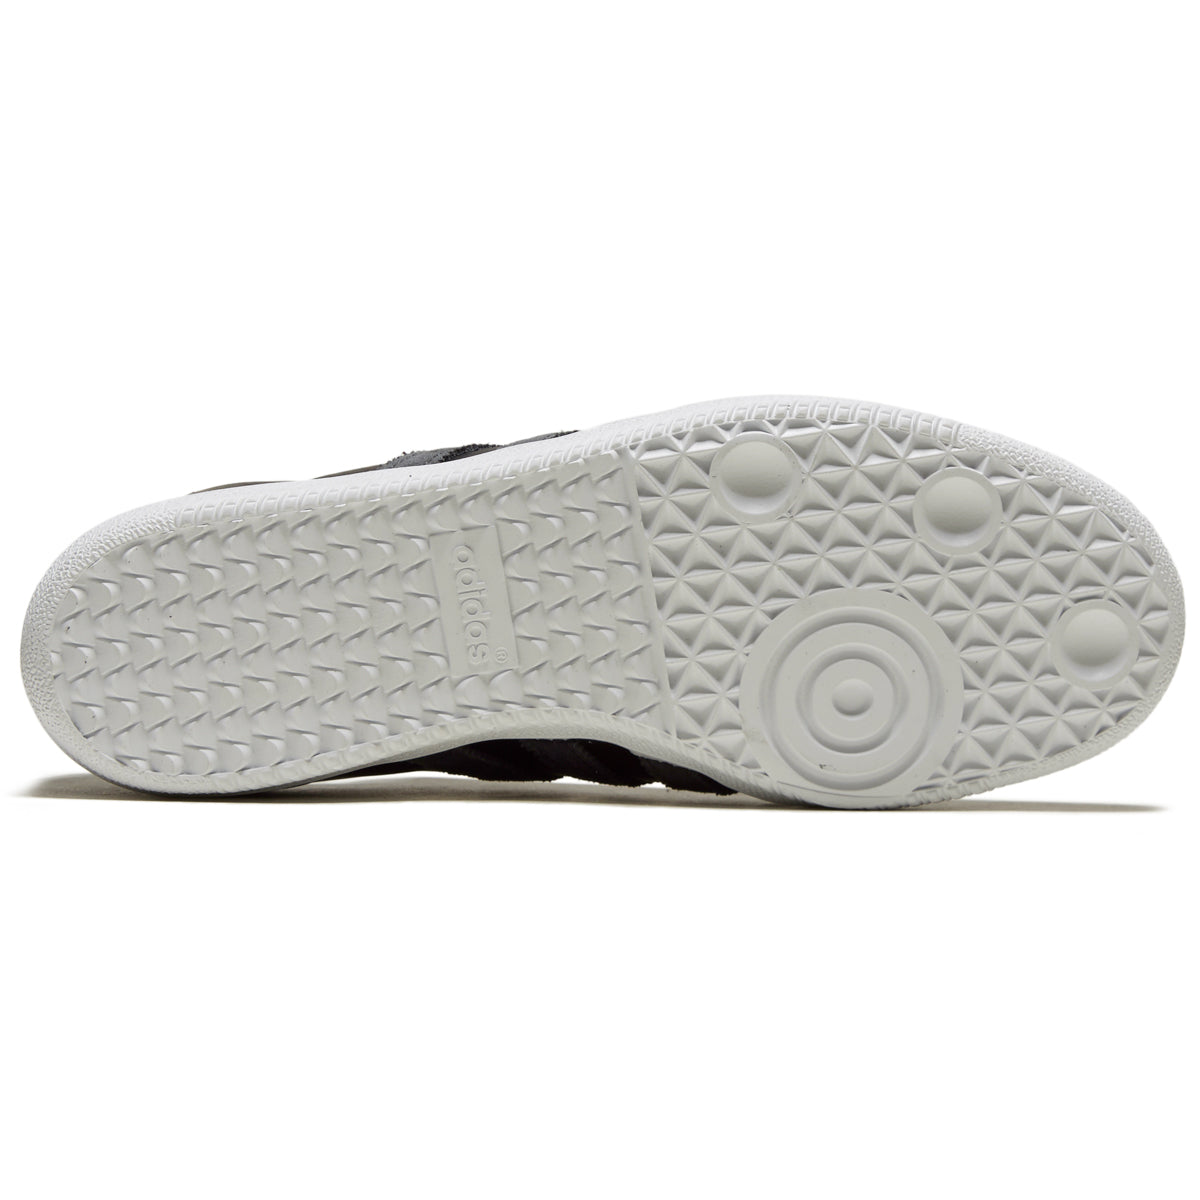 Adidas Samba ADV Shoes - Core Black/Carbon/Silver Metallic